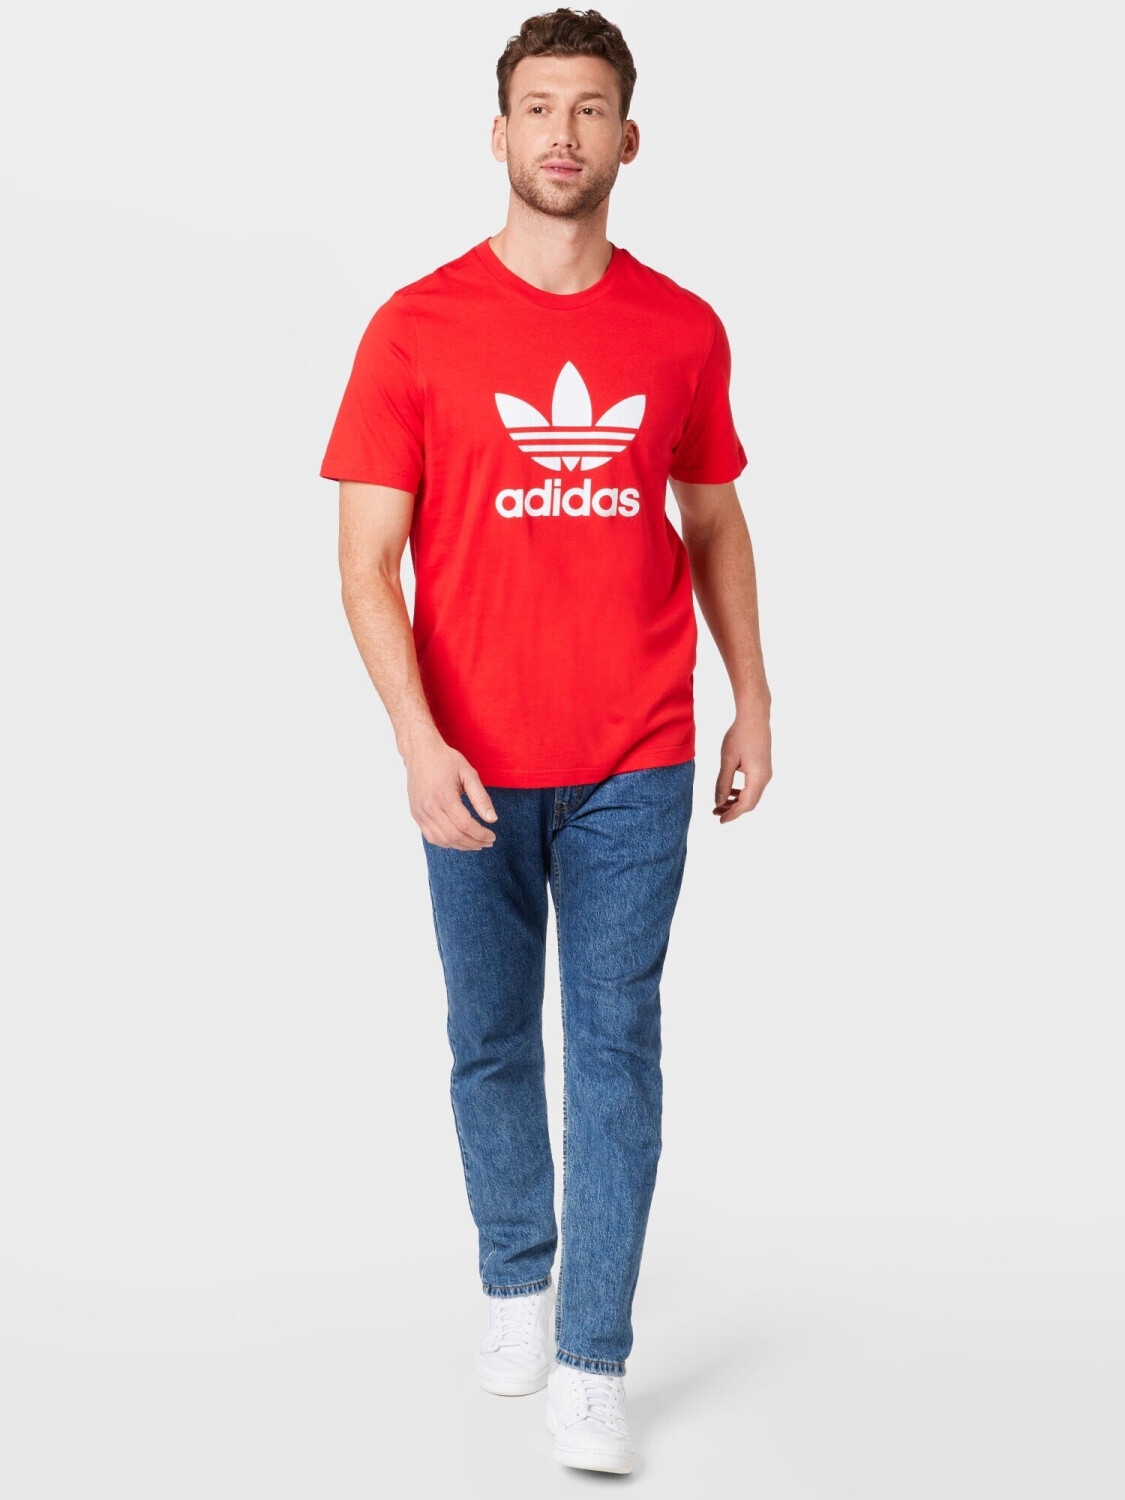 € Trefoil Adidas Preisvergleich red/white ab 21,00 vivid | Classics Adicolor bei T-Shirt